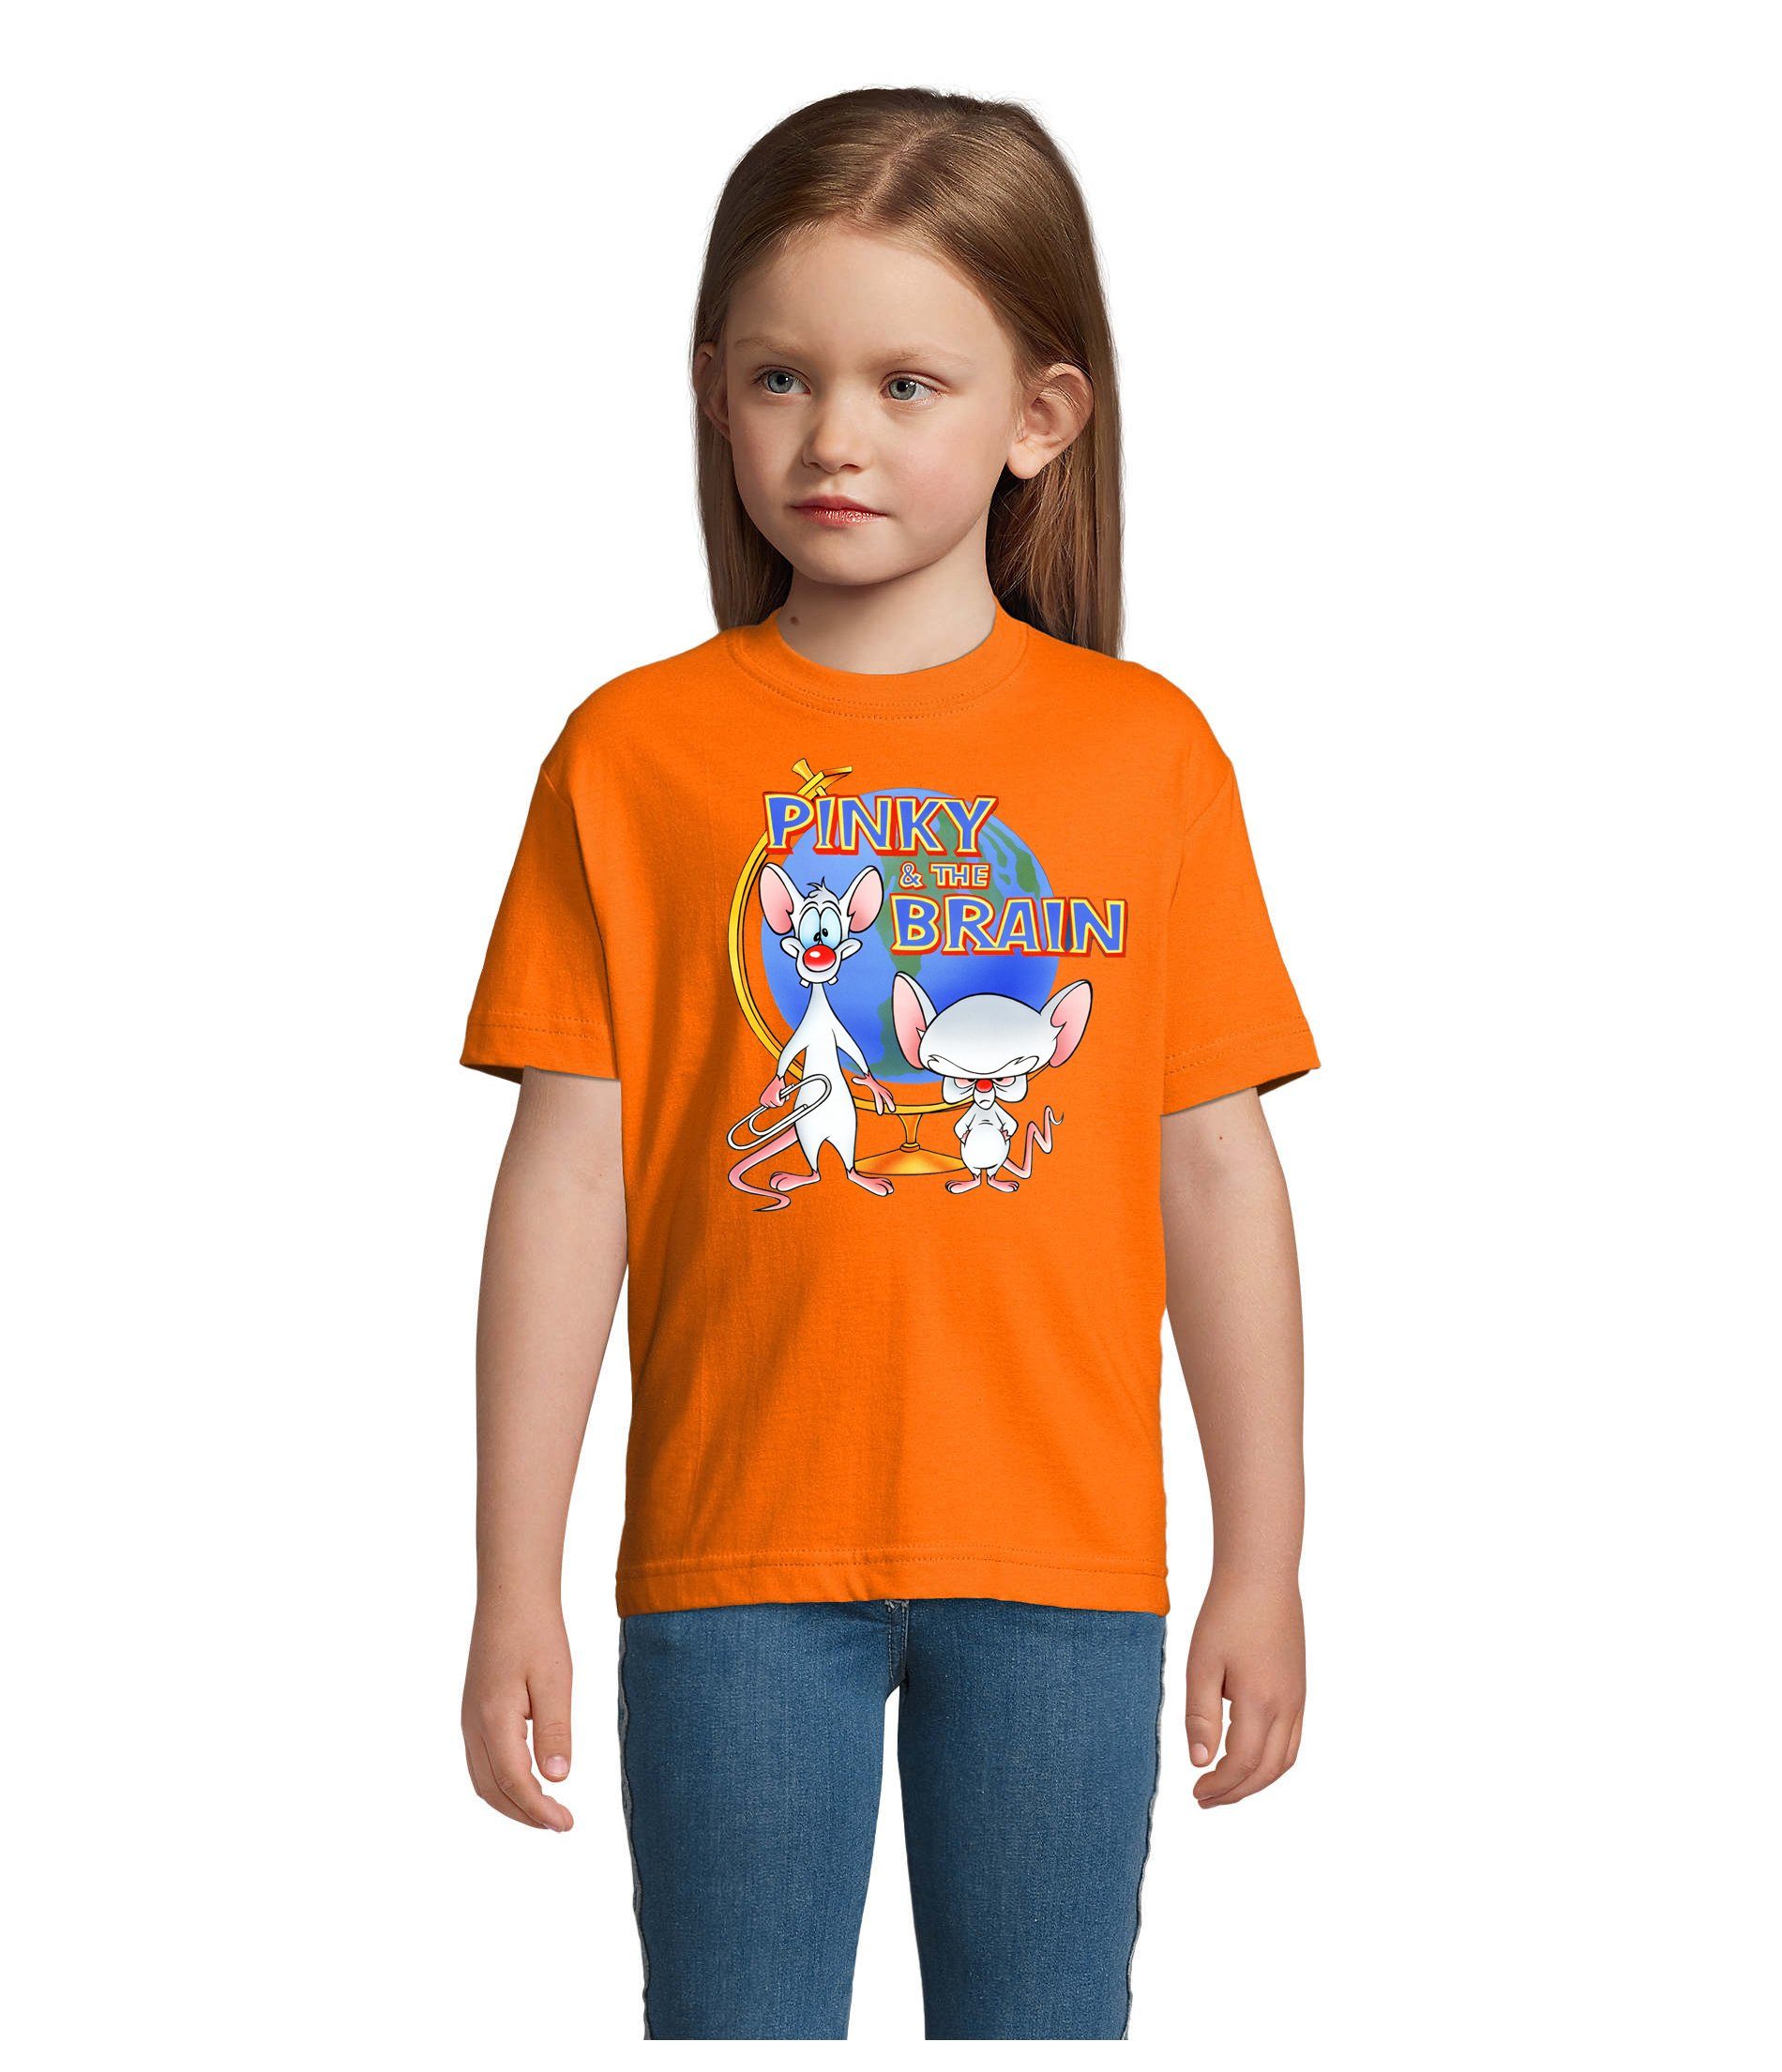 Orange T-Shirt Pinky Brownie Brain & the Blondie Cartoon Kinder Comic Weltherrschaft and